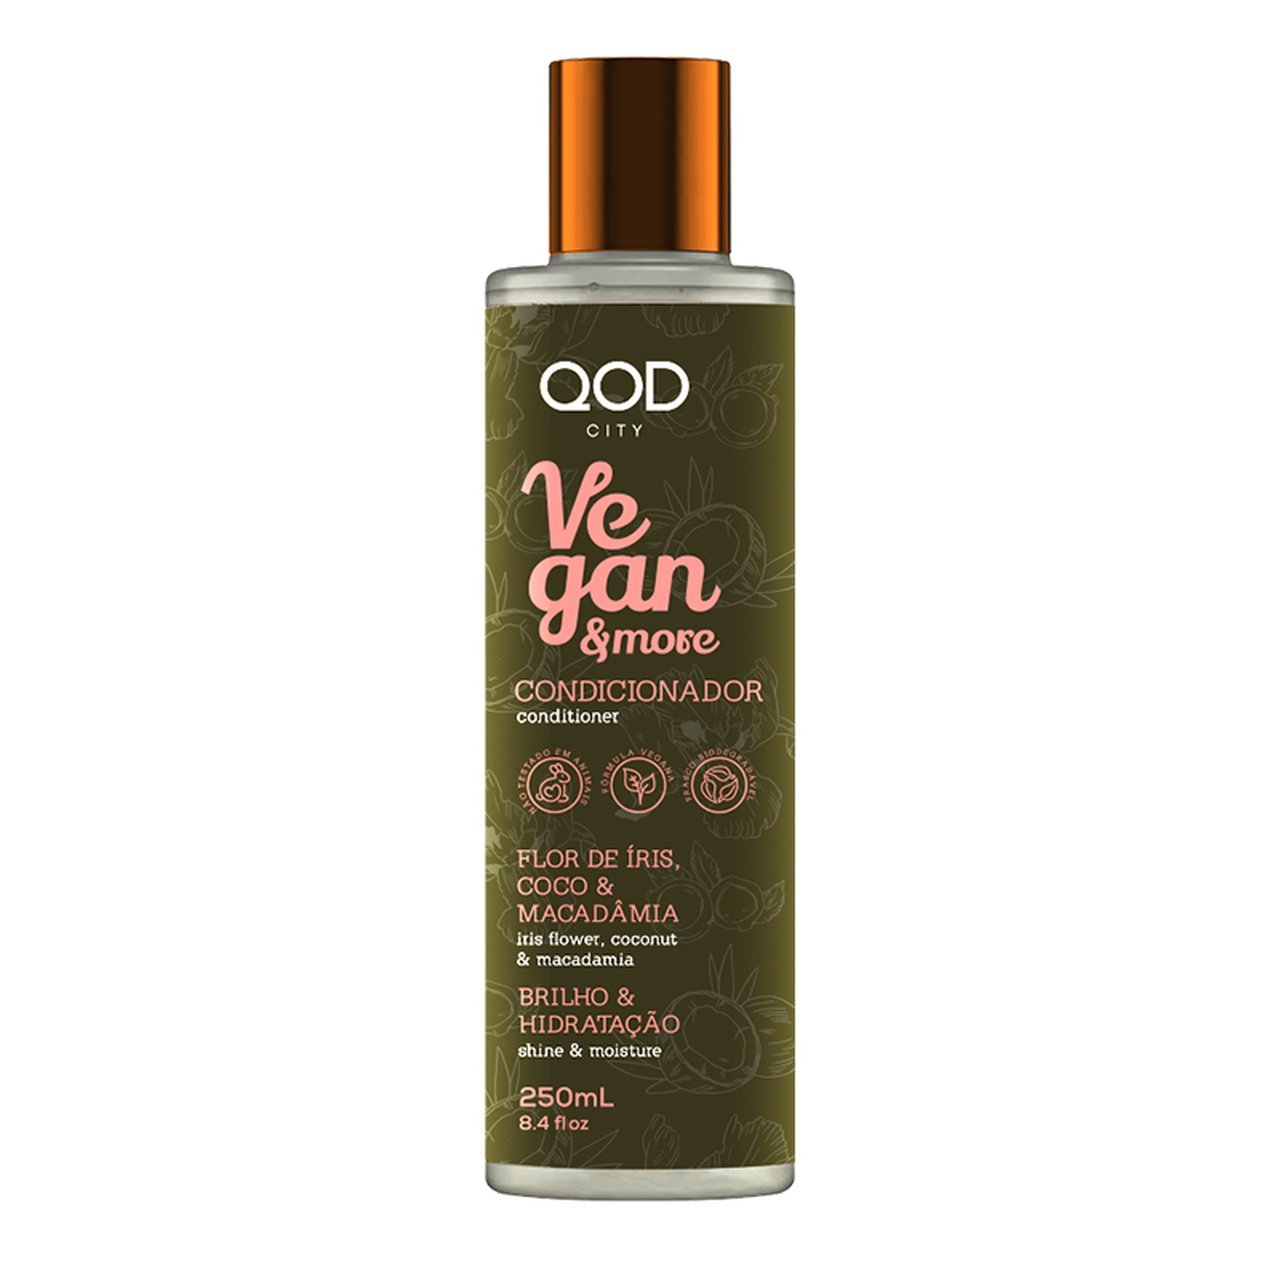 QOD Hair Care Vegan & More Conditioner 250ML - QOD